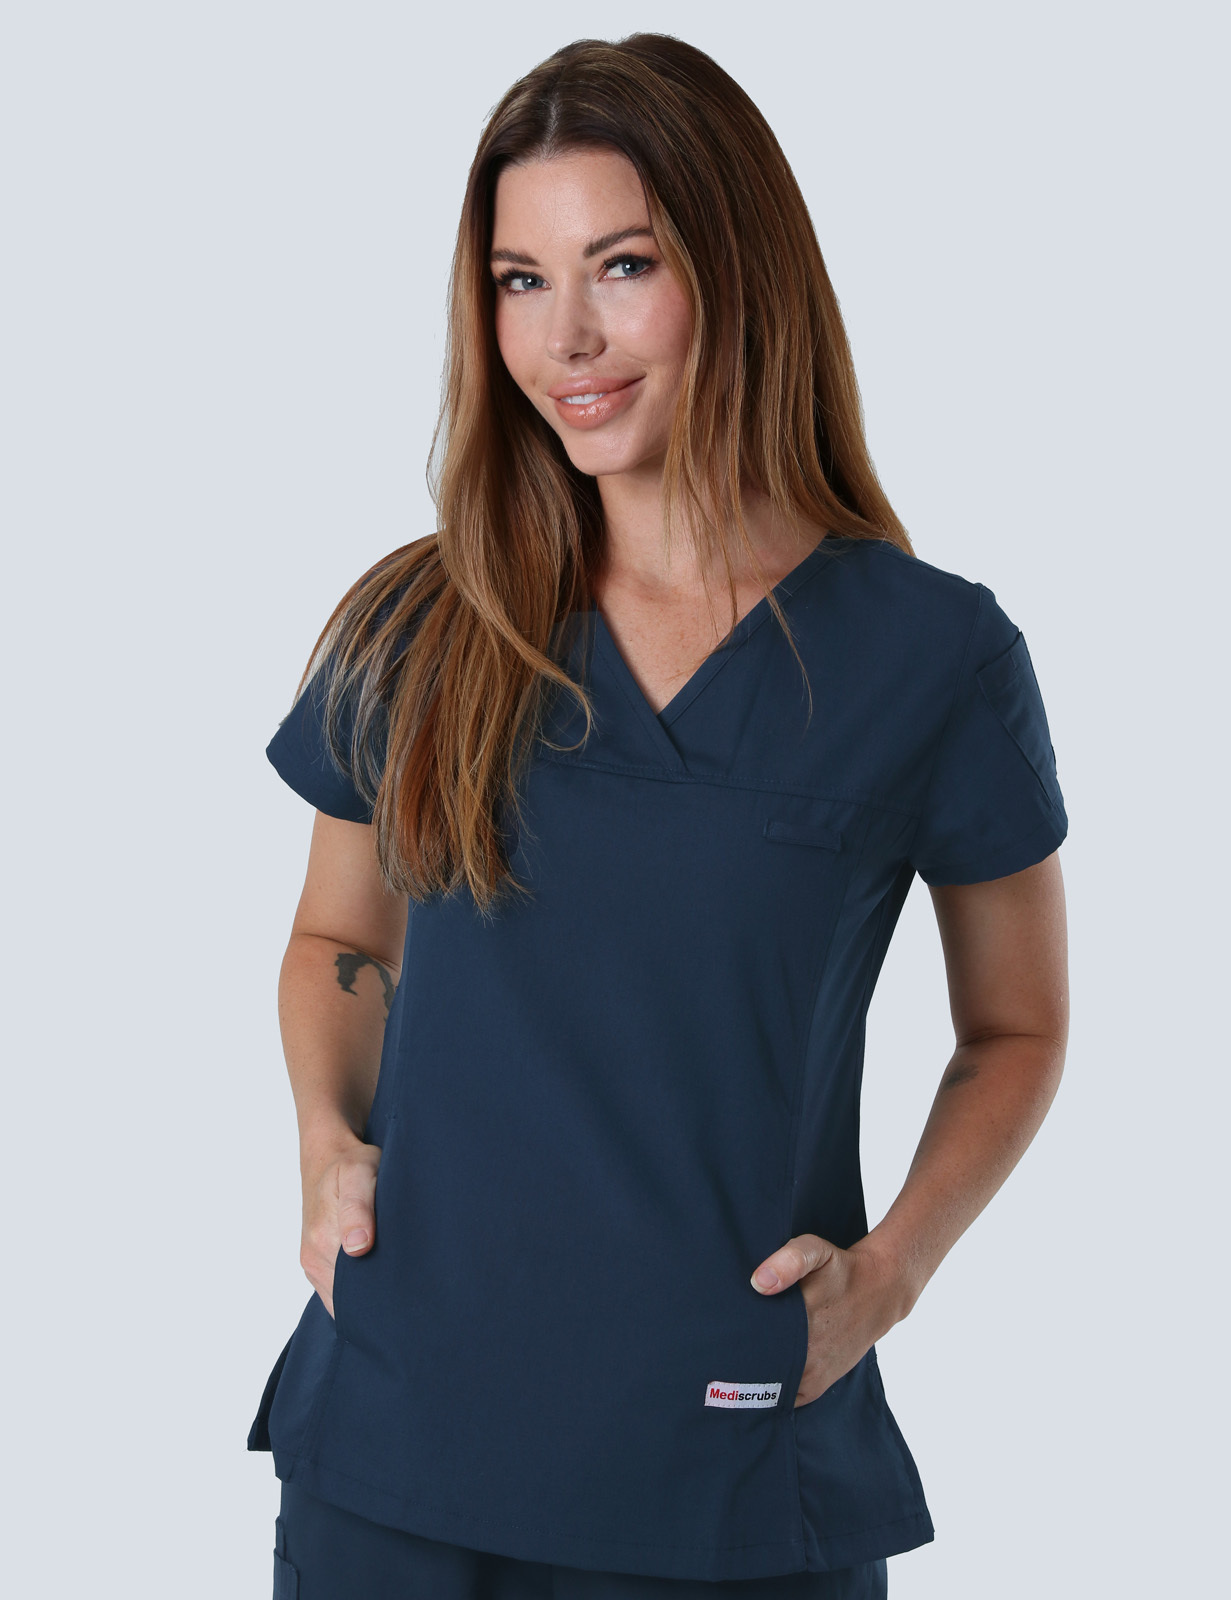 Rockhampton Hospital Clinical Nurse Uniform Set Bundle (Women's Fit Solid Top and Cargo Pants in Navy incl Logos)